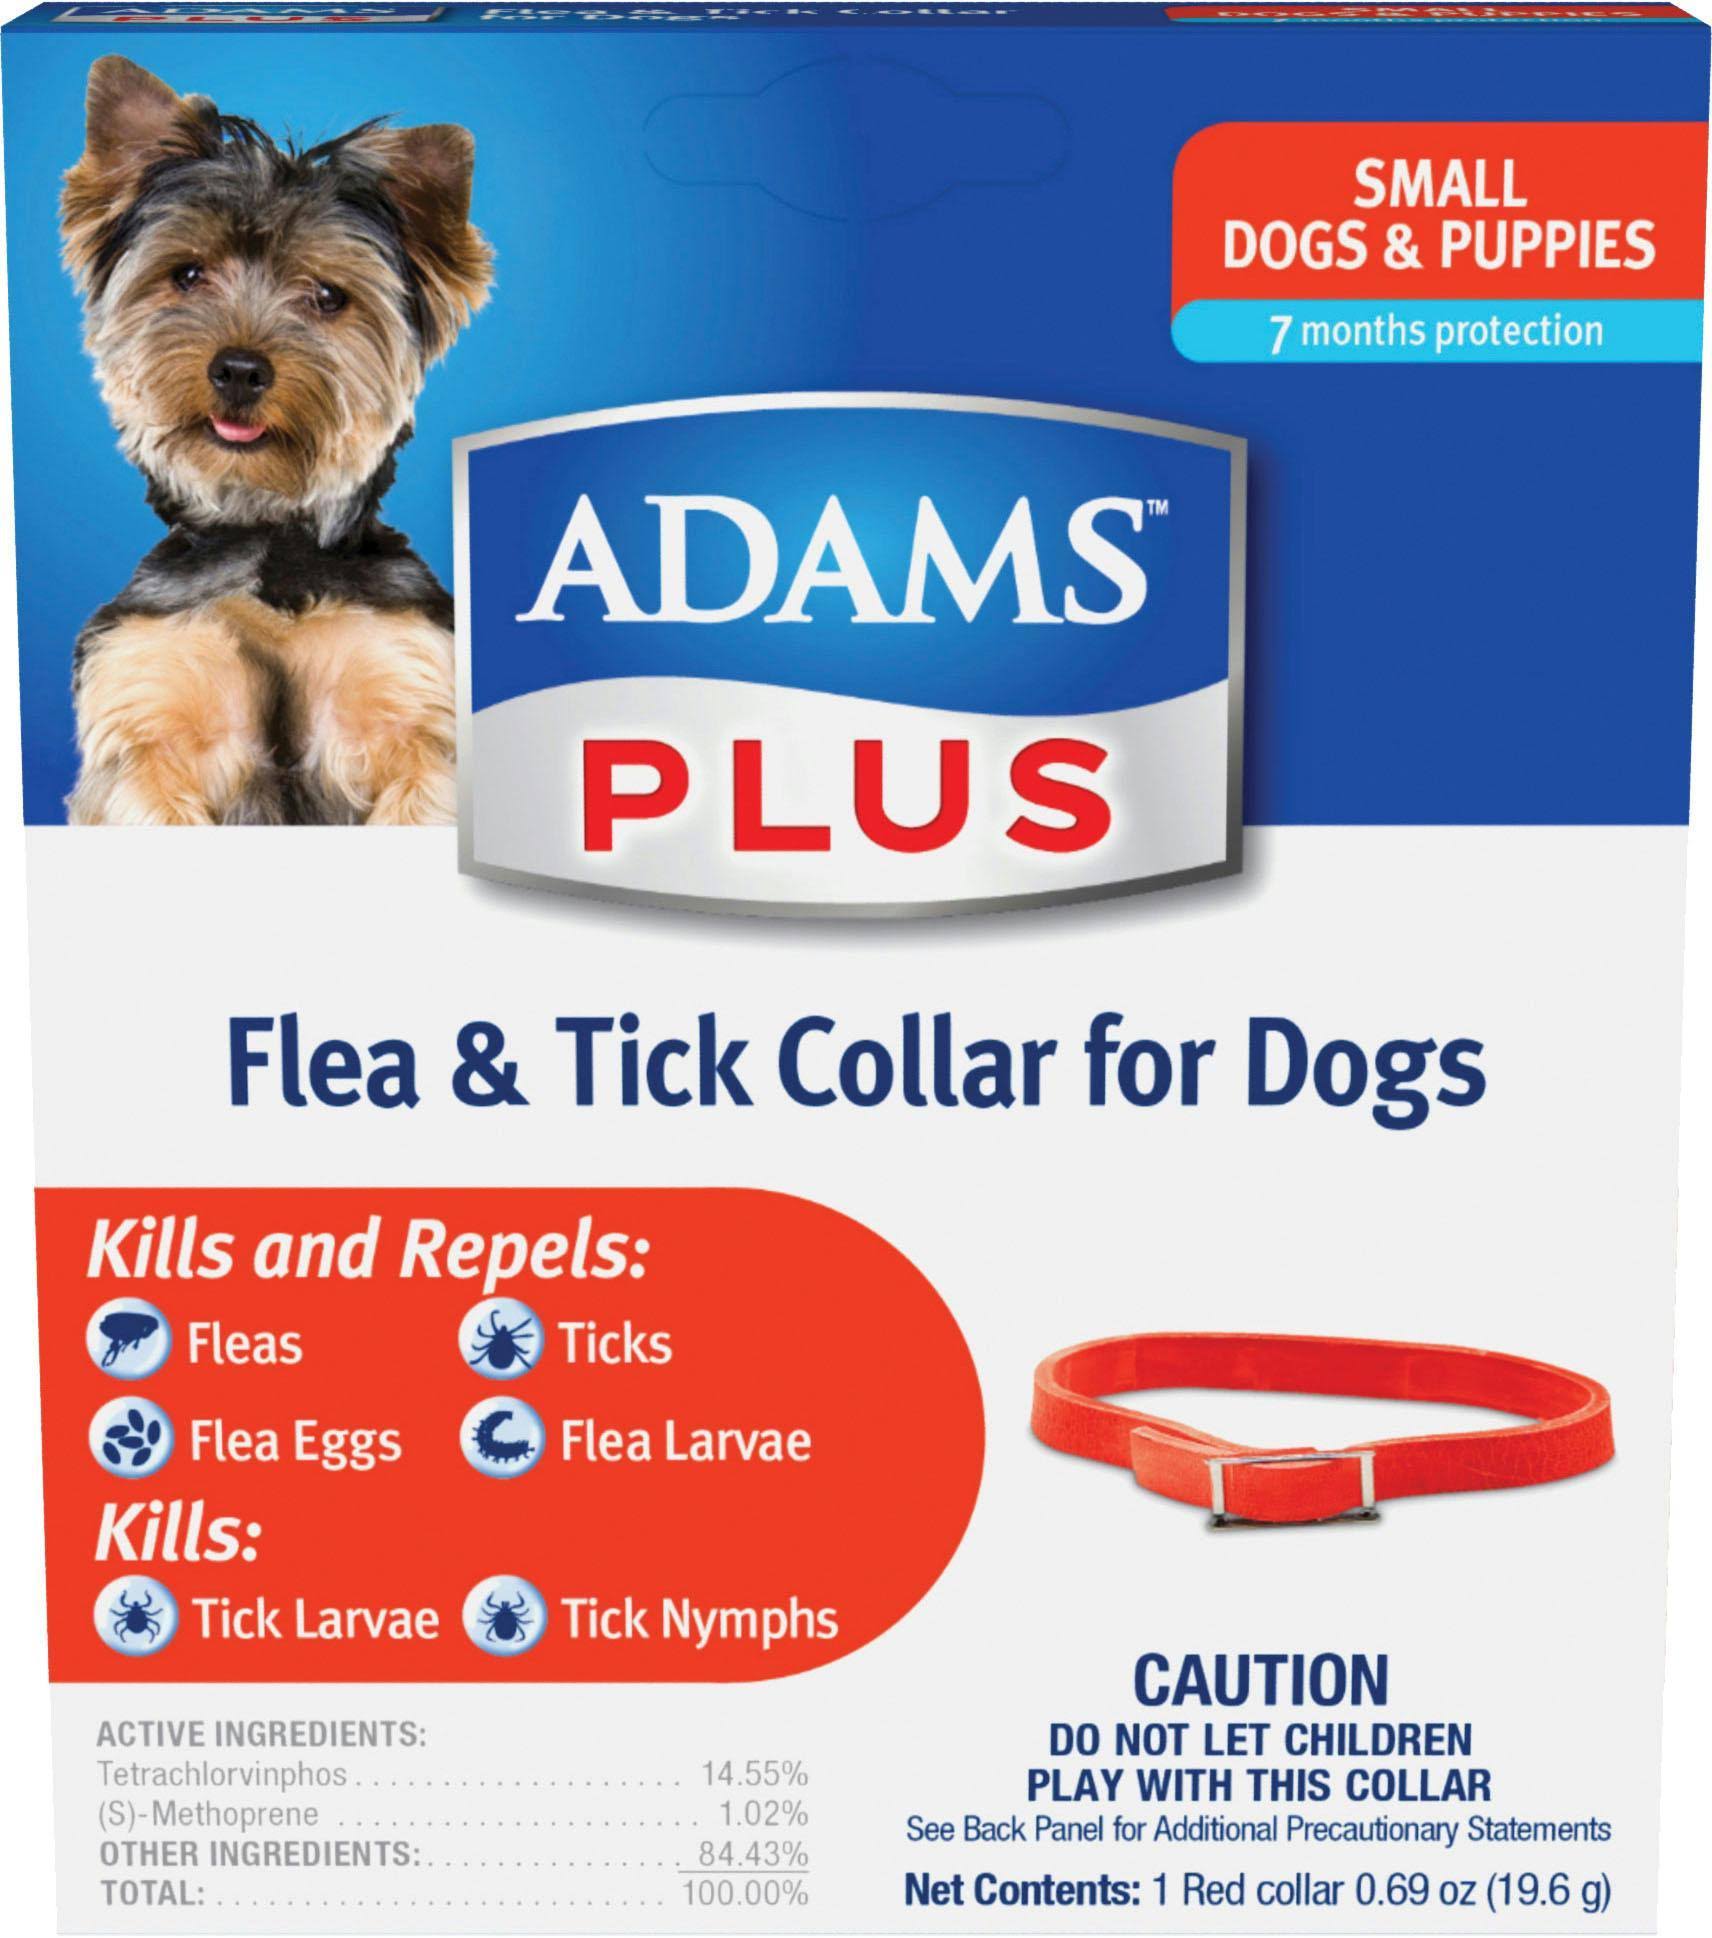 Adams' Plus Flea & Tick Collar - Small